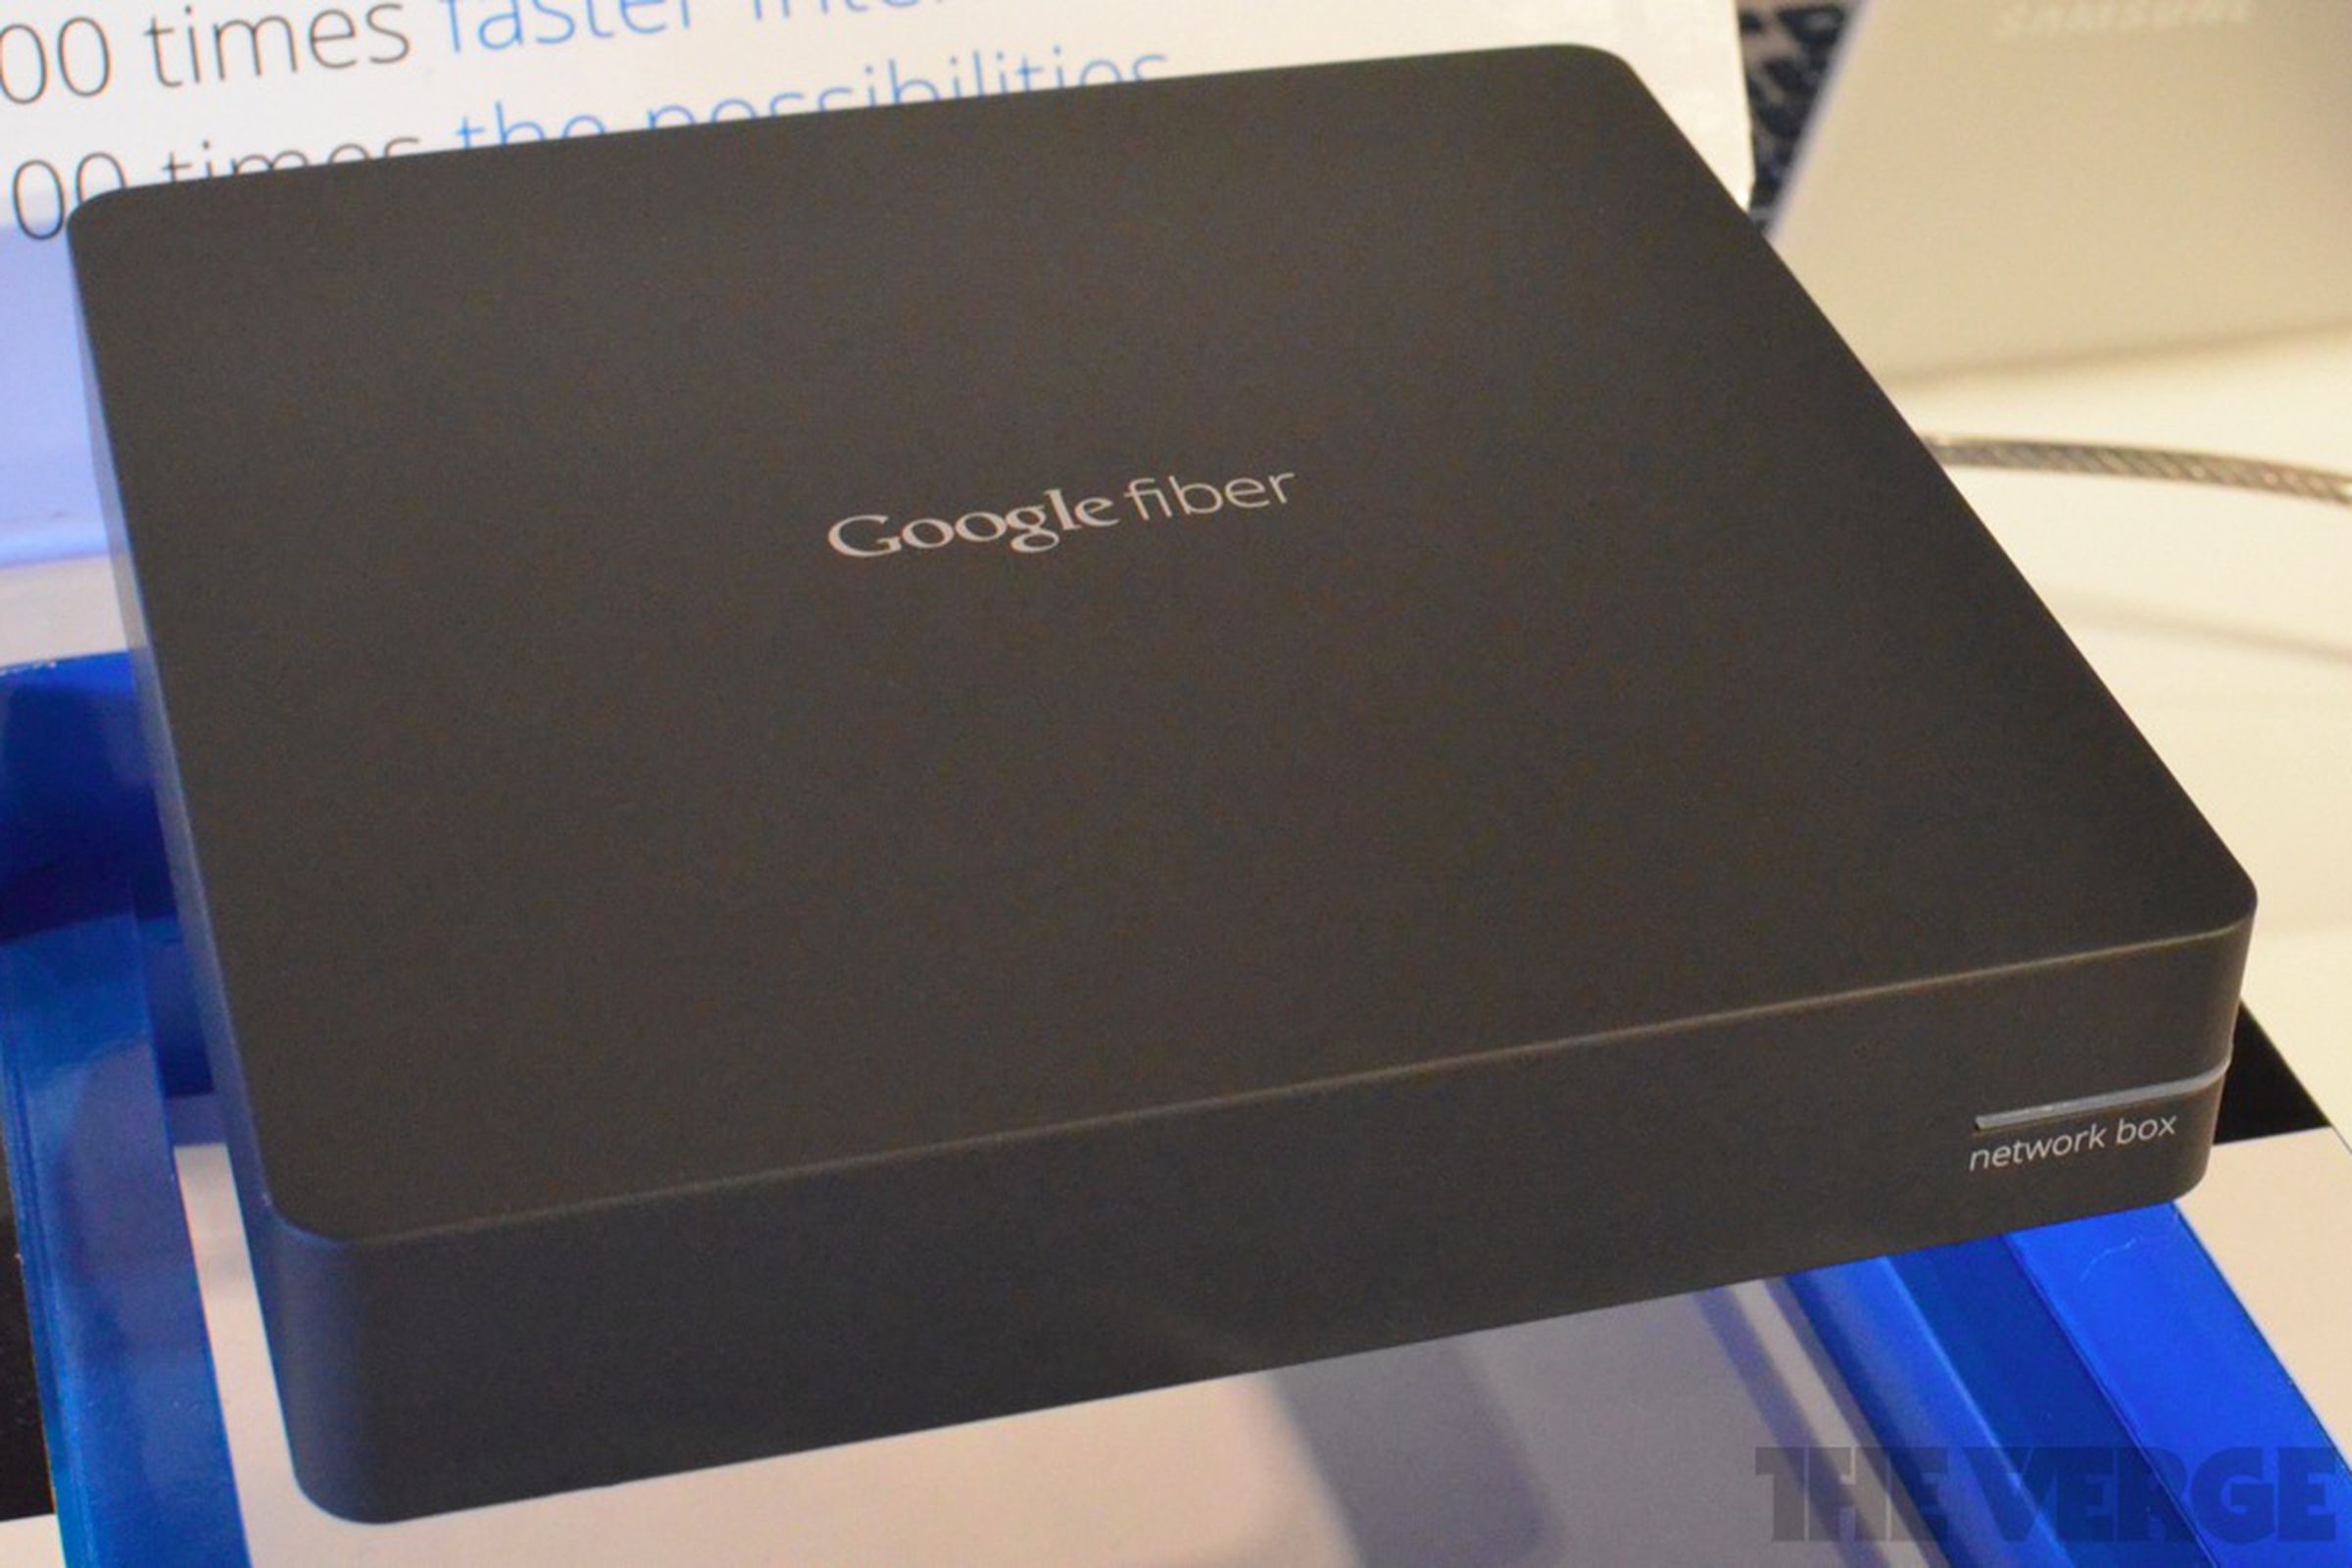 Gallery Photo: Google Fiber + TV hardware hands-on photos